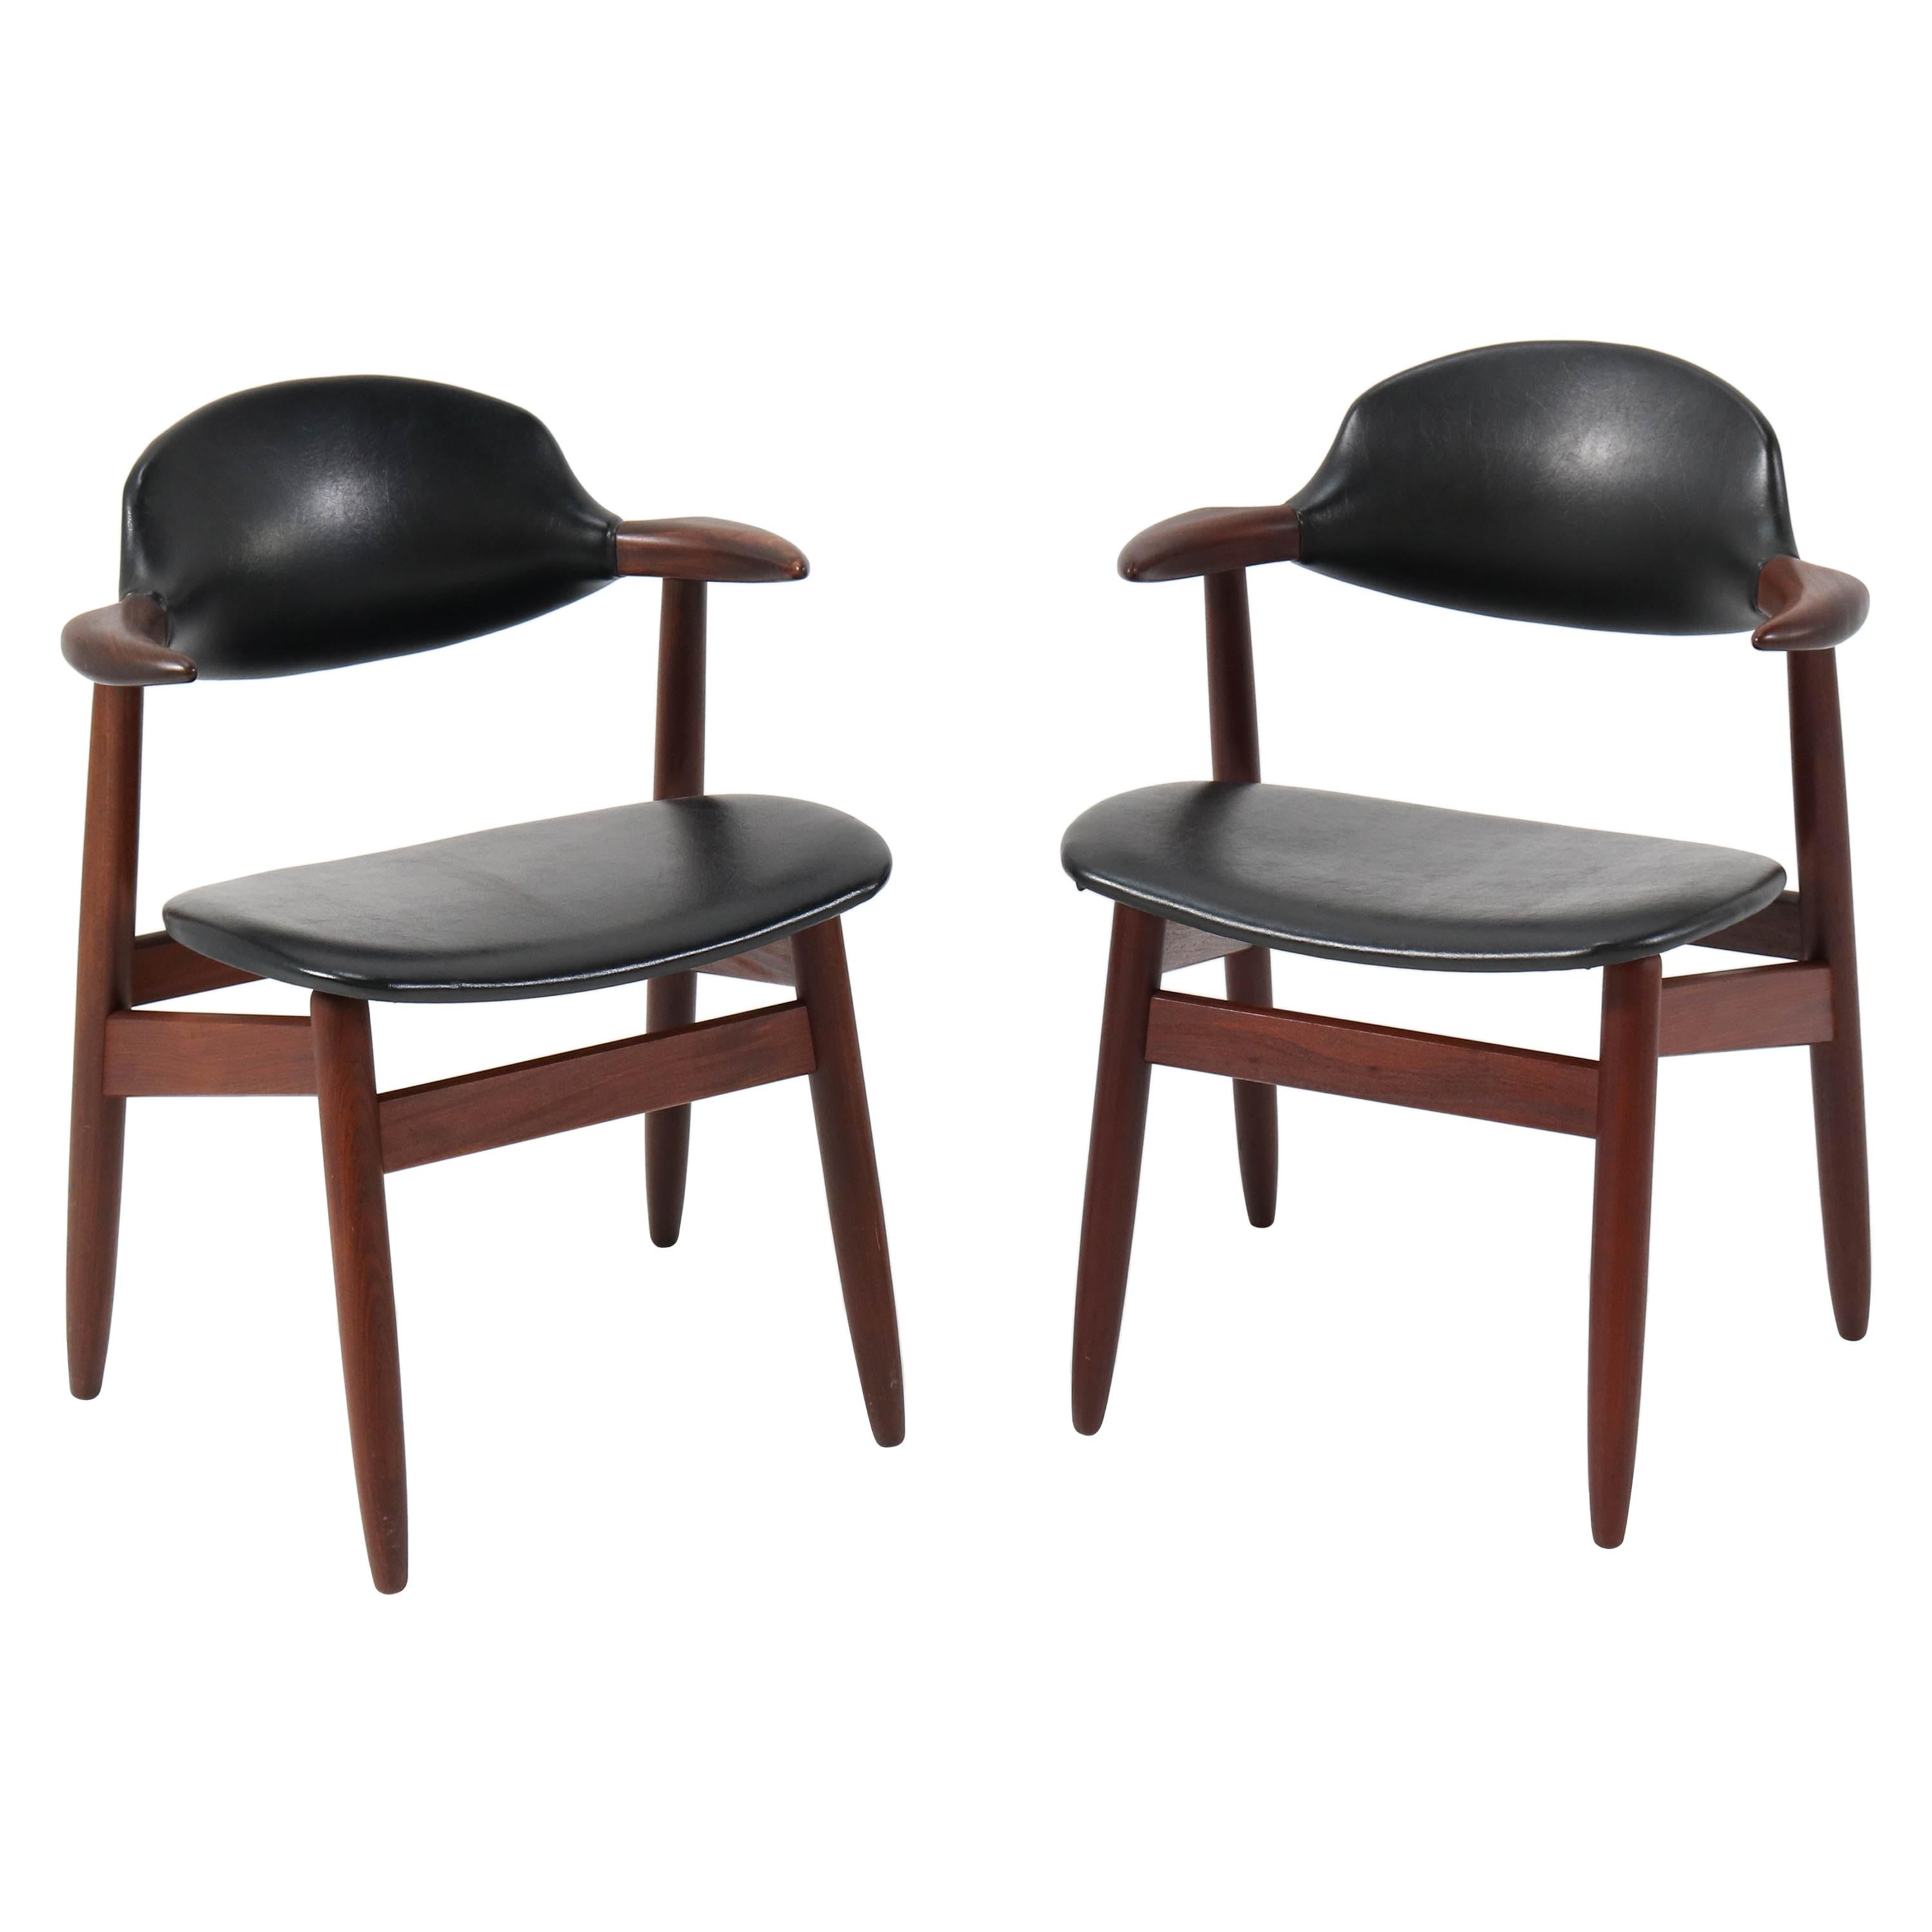 Two Mid-Century Modern Teak Cowhorn Chairs by Tijsseling for Hulmefa, 1960s